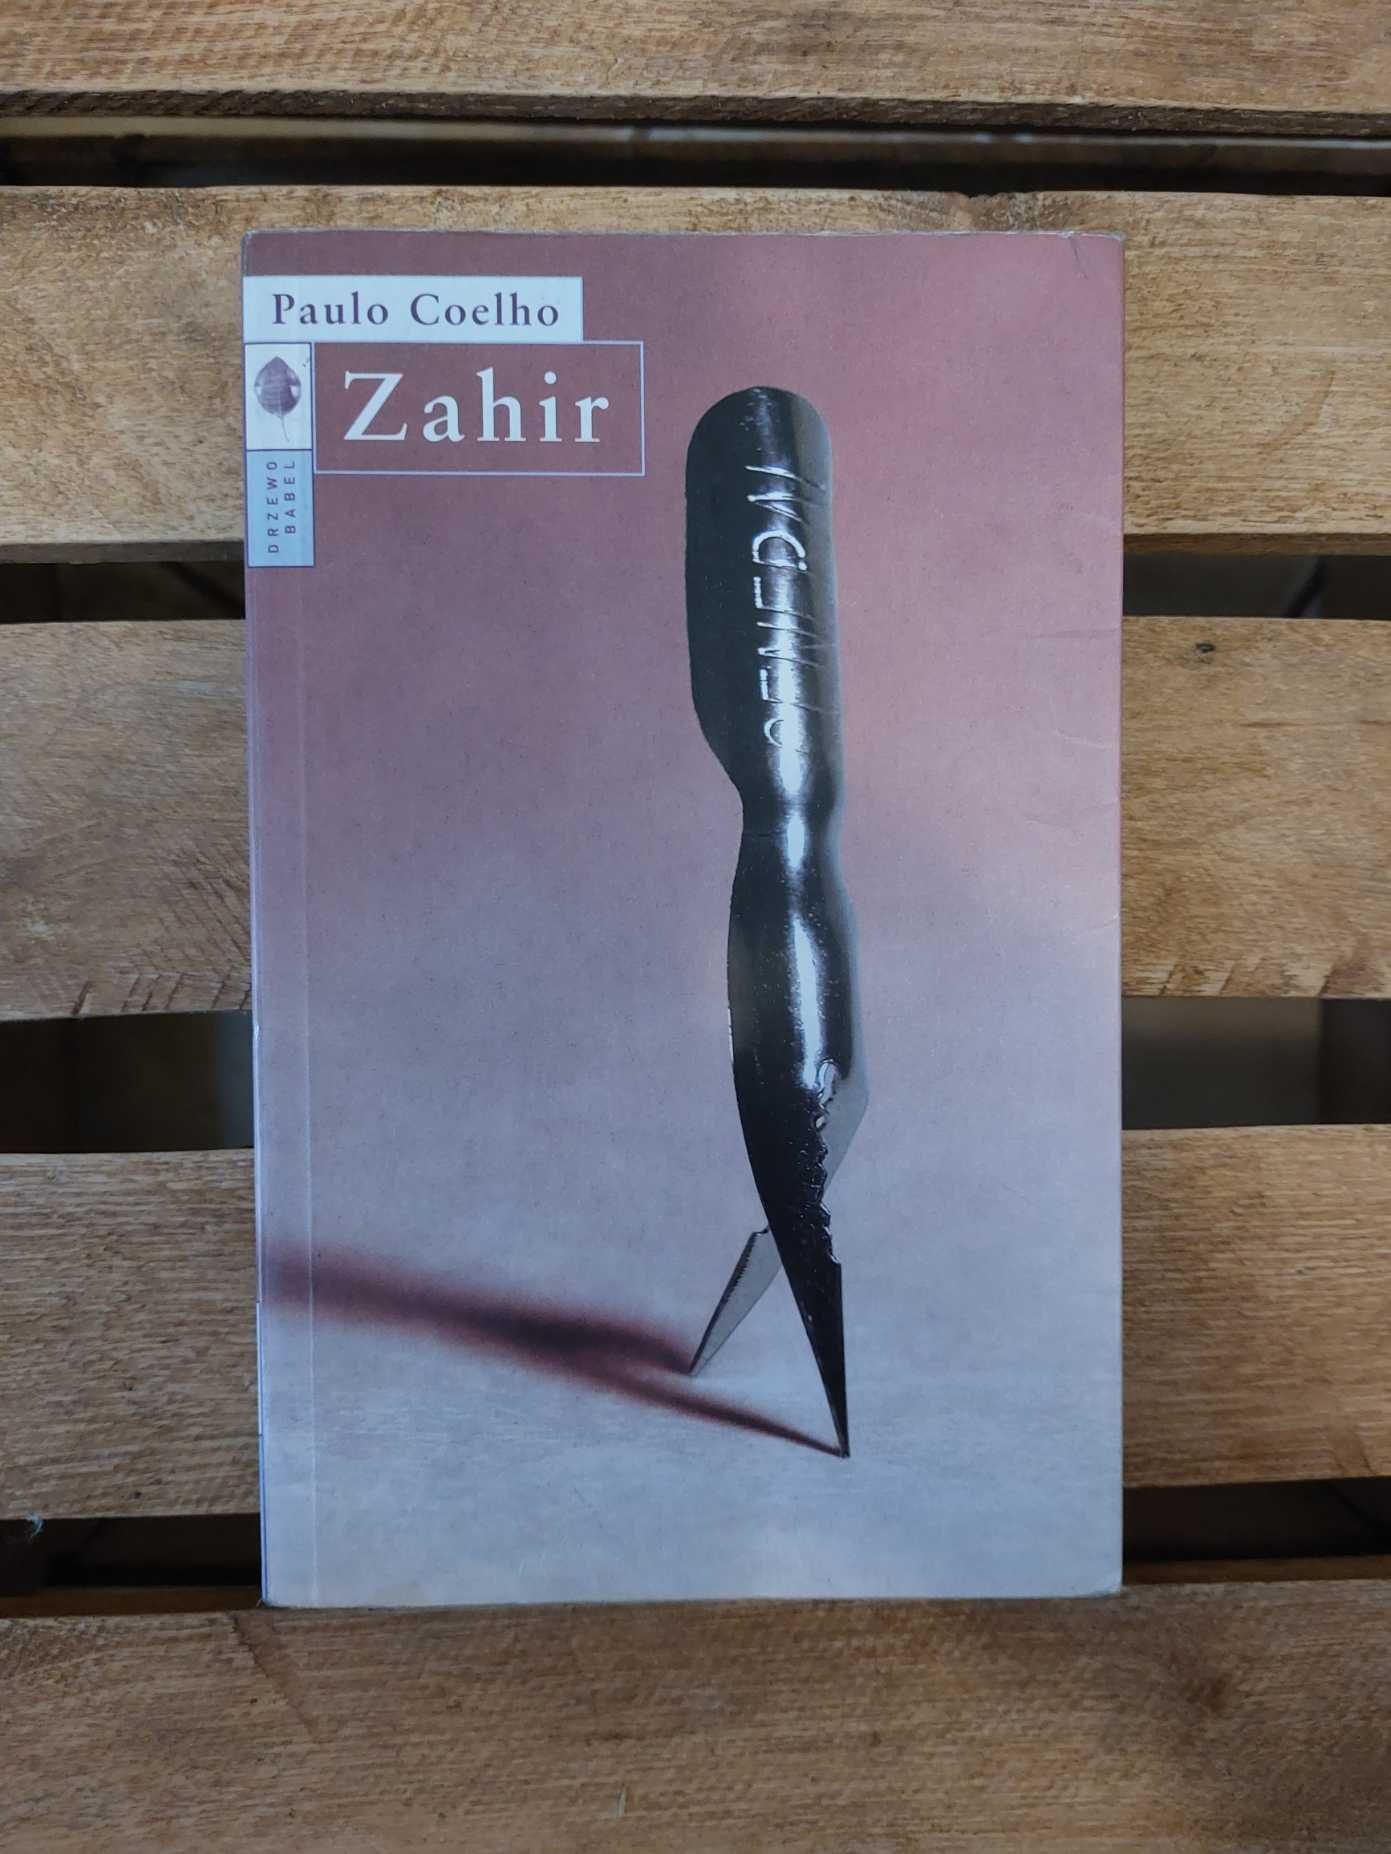 Paulo Coelho "Zahir"